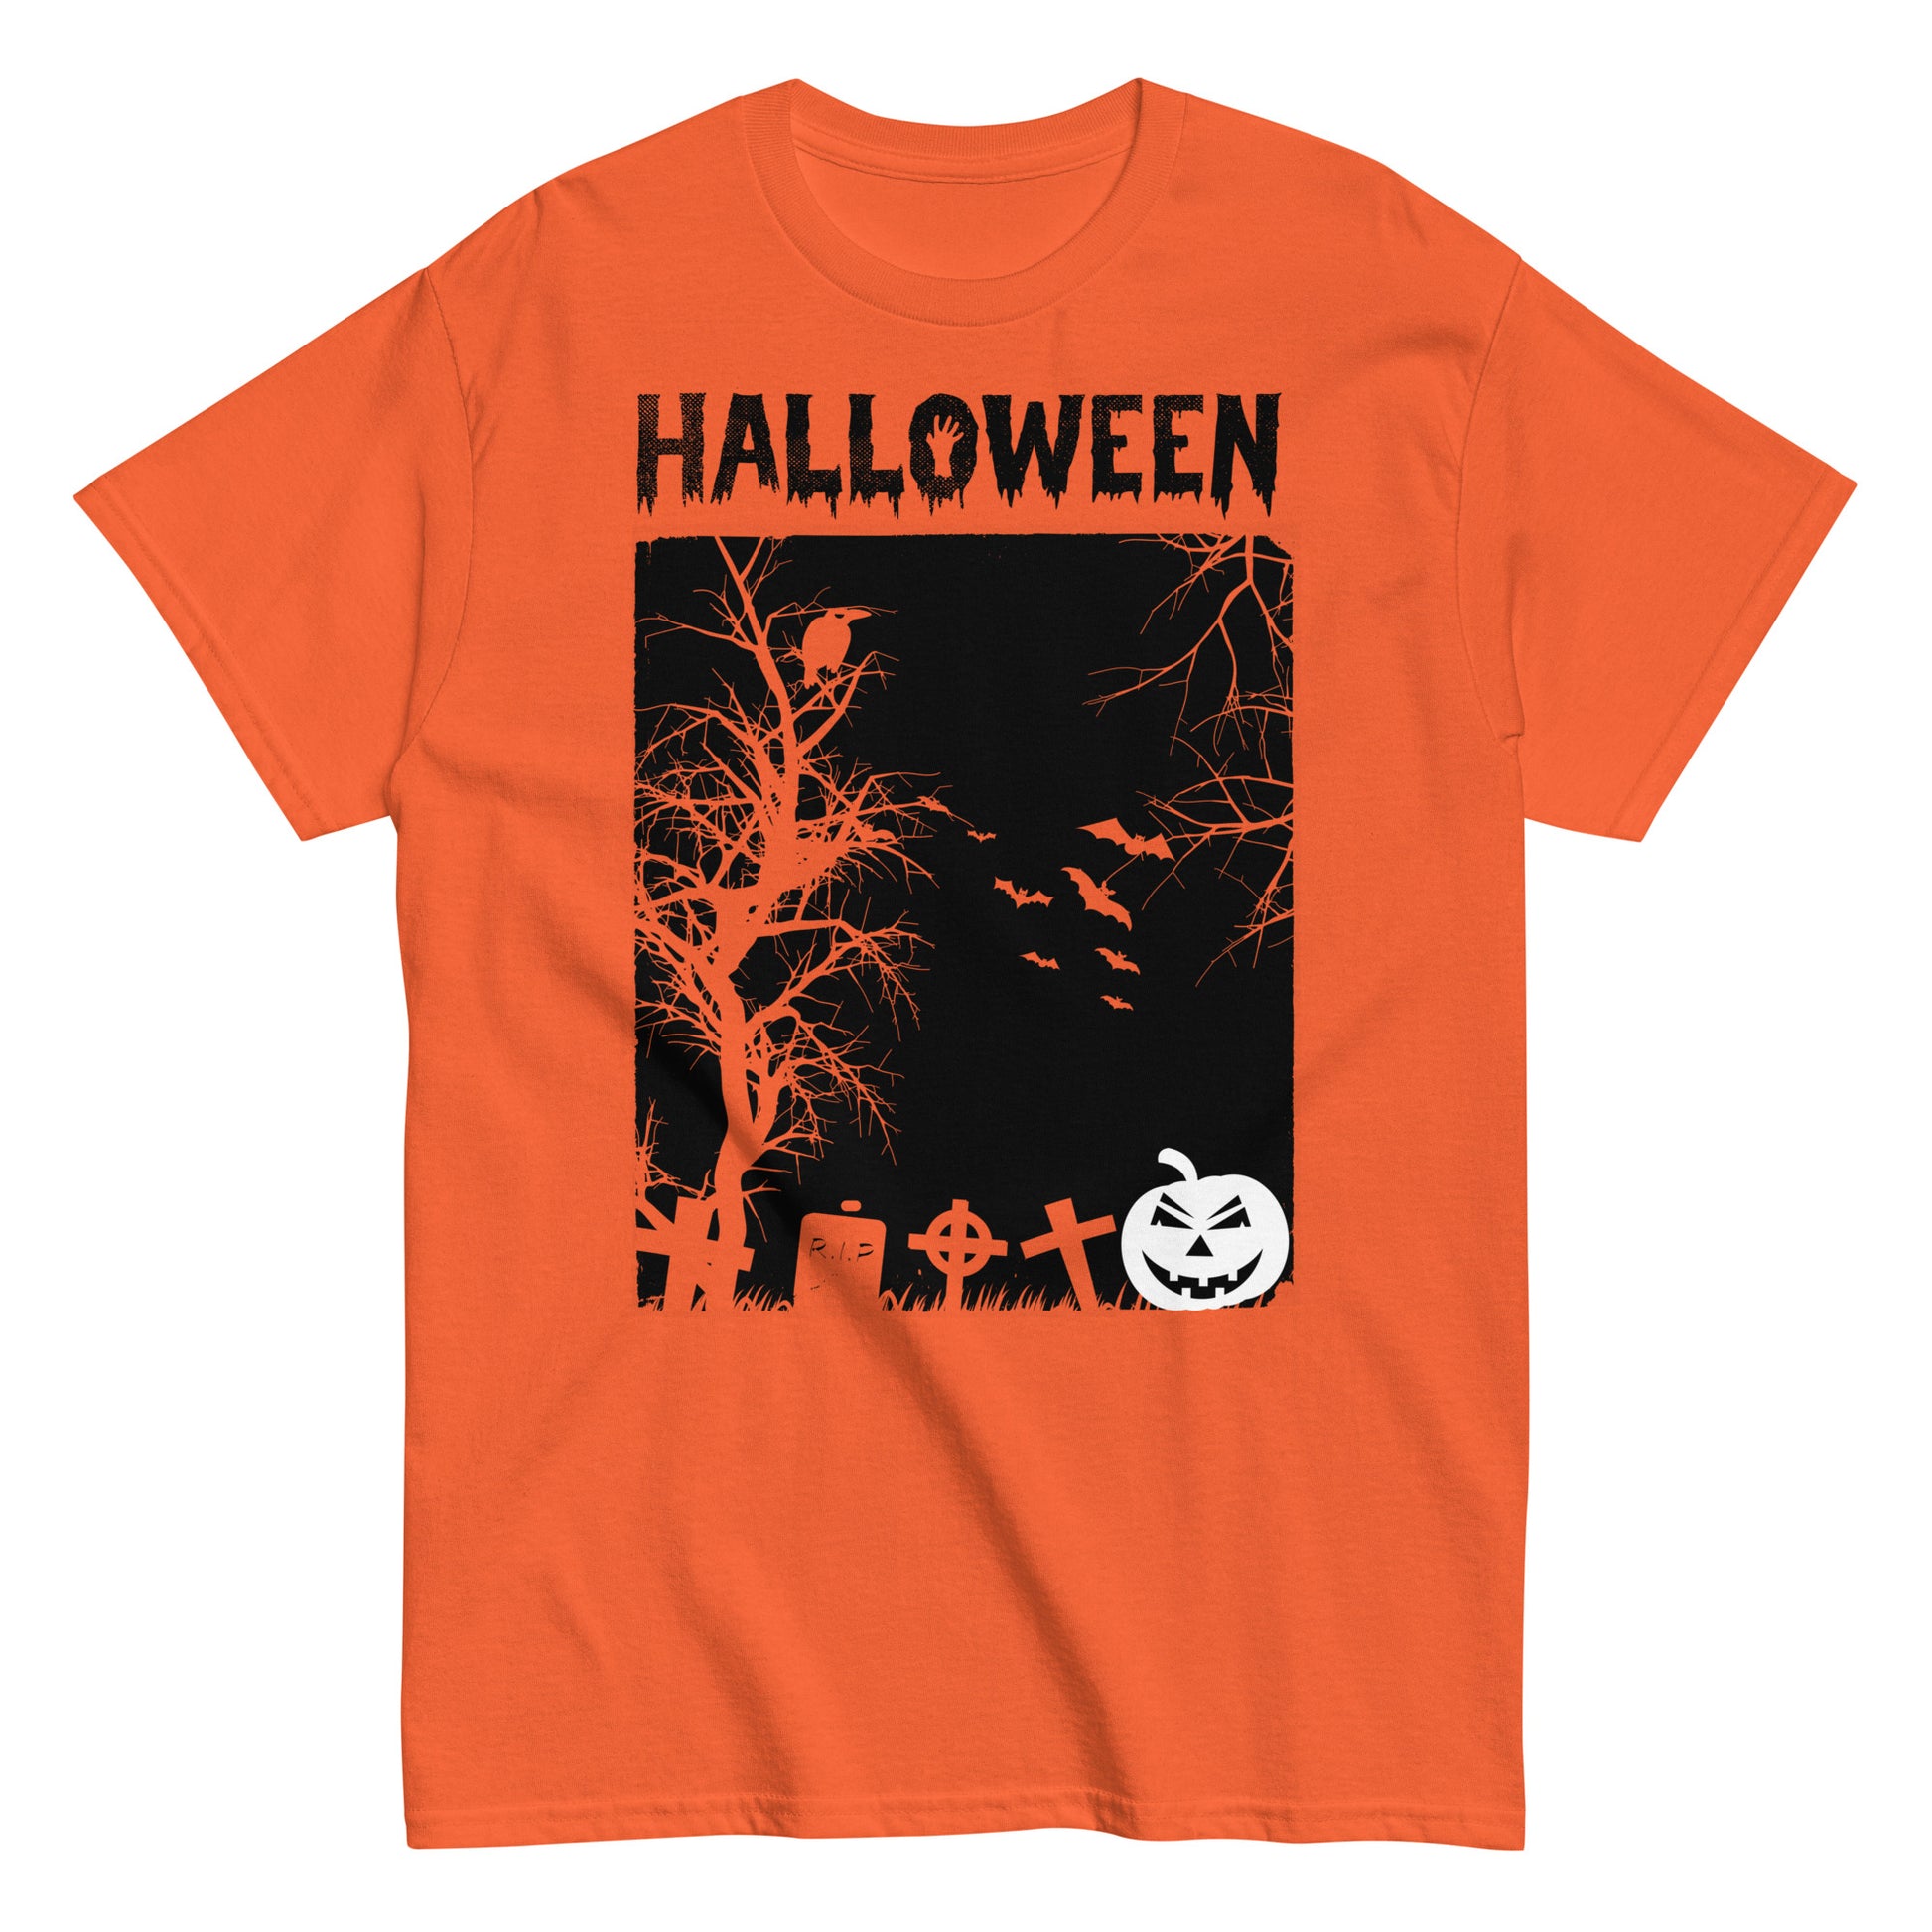 Creep It Cozy: Halloween T-Shirt